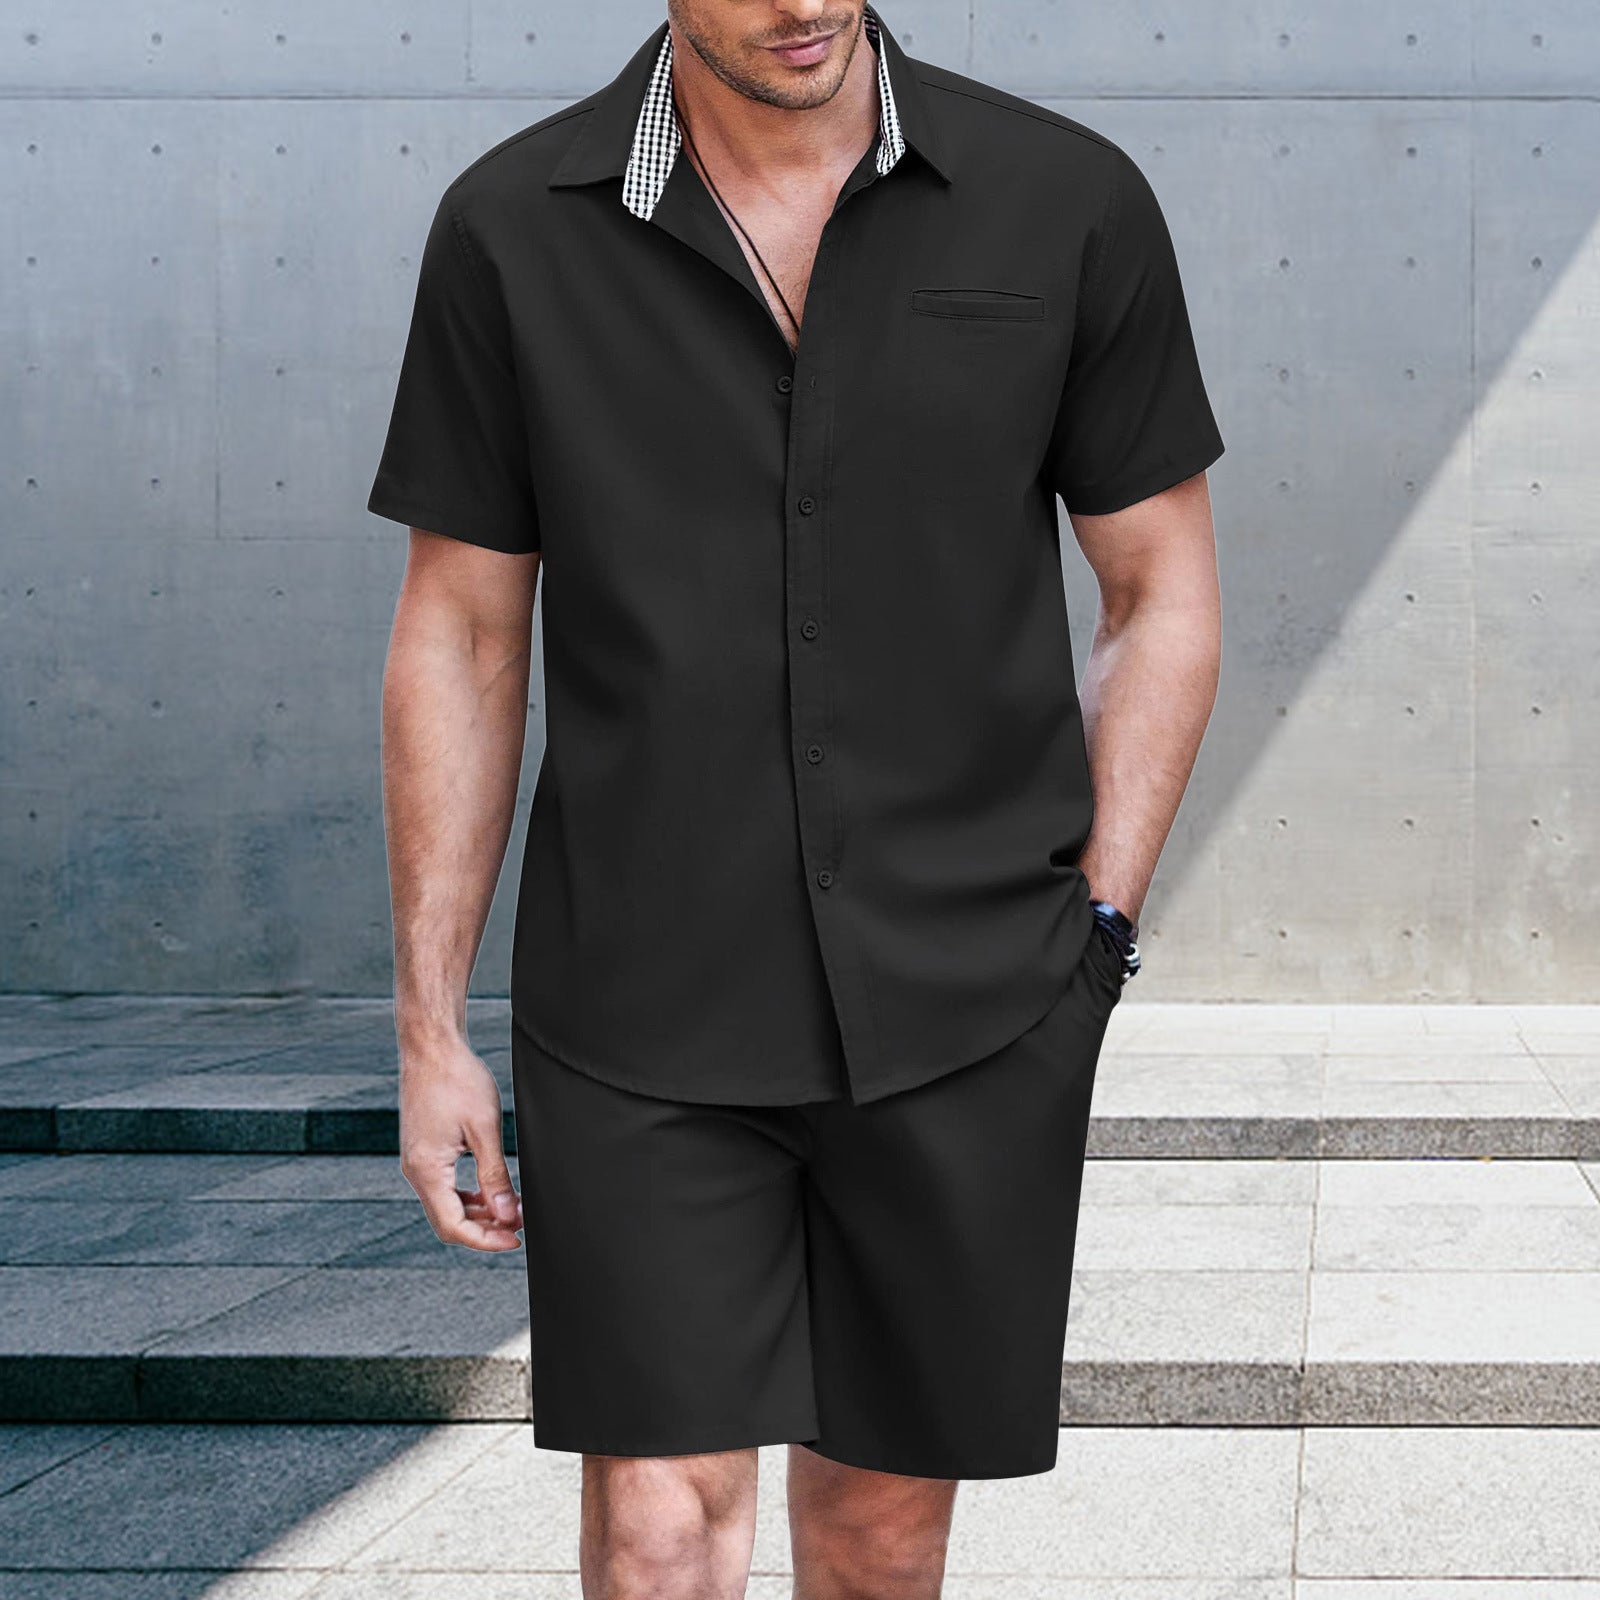 Herenmode casual overhemd shorts pak - NextthinkShop0CJTW206763908HS0